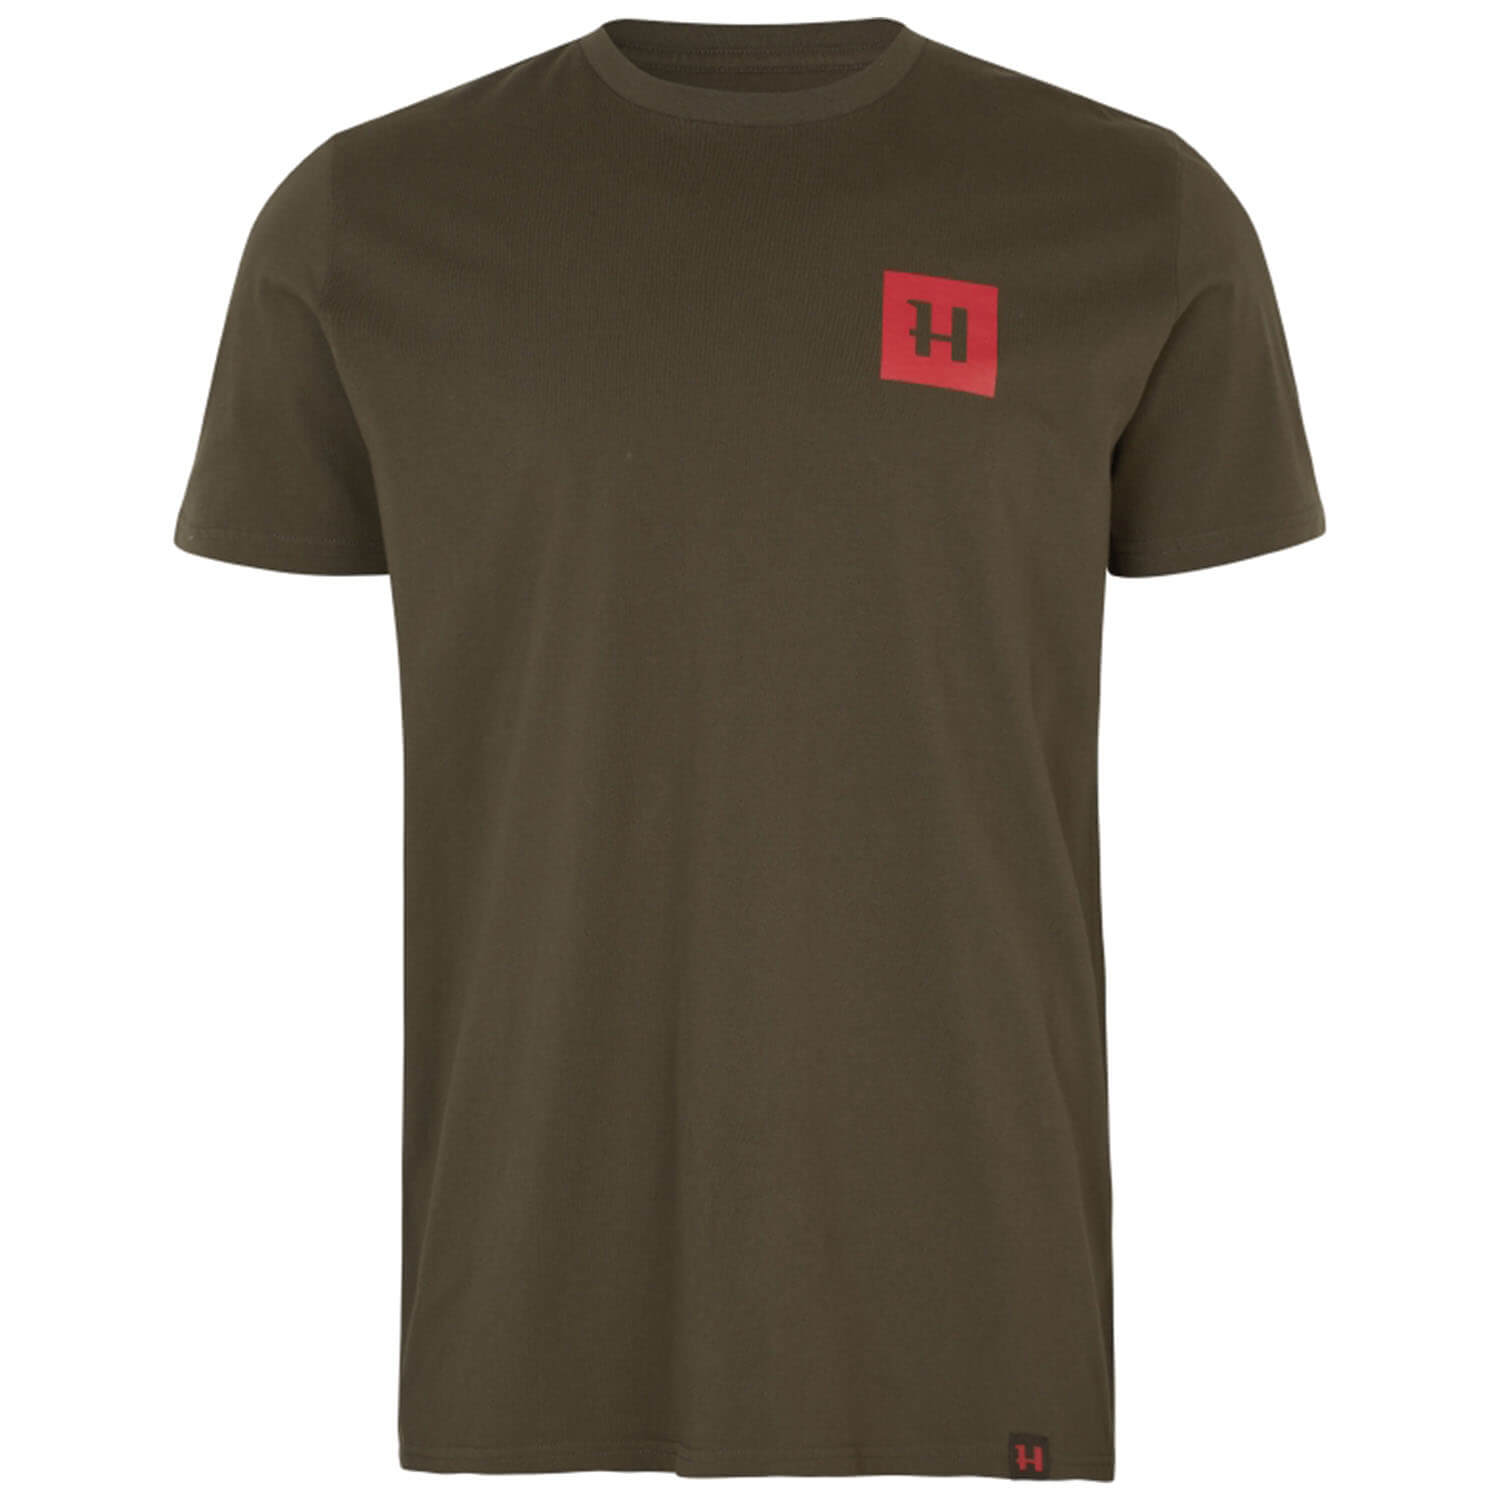  Härkila Frej T-shirt (Wilgengroen) - Jachtshirts